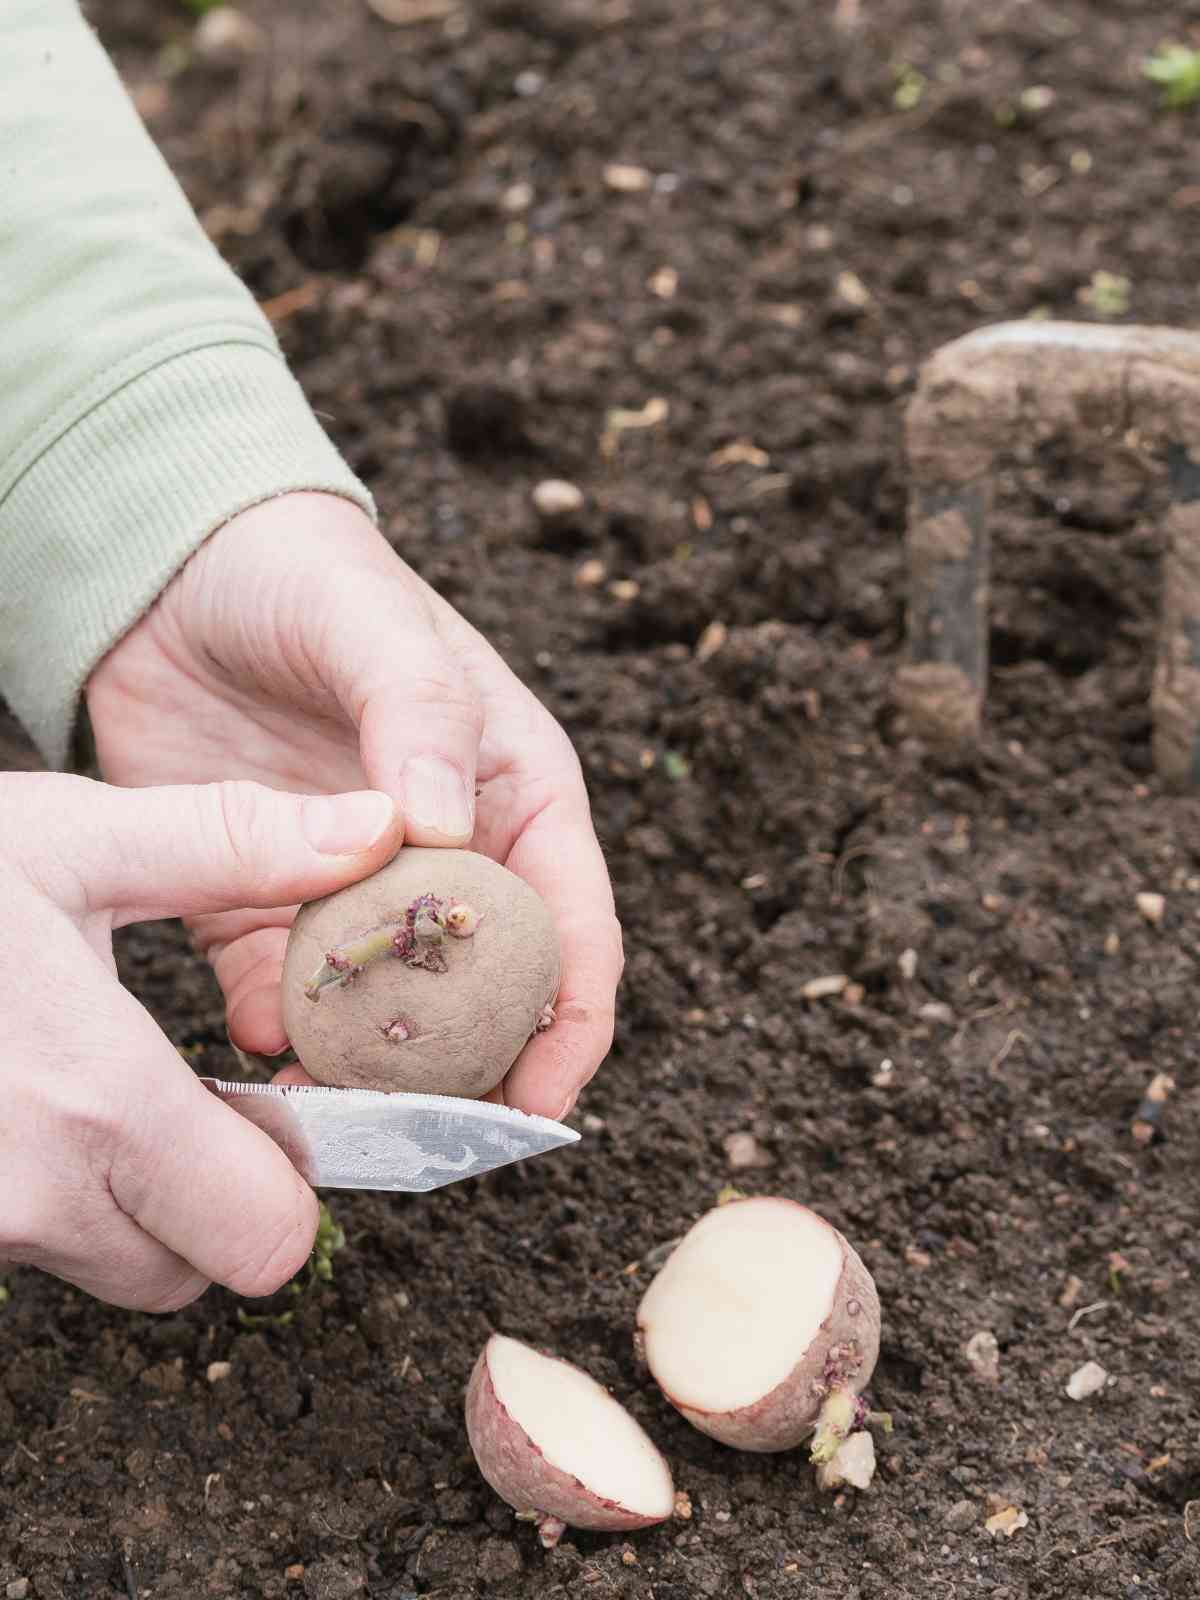 How To Grow Potato Plants